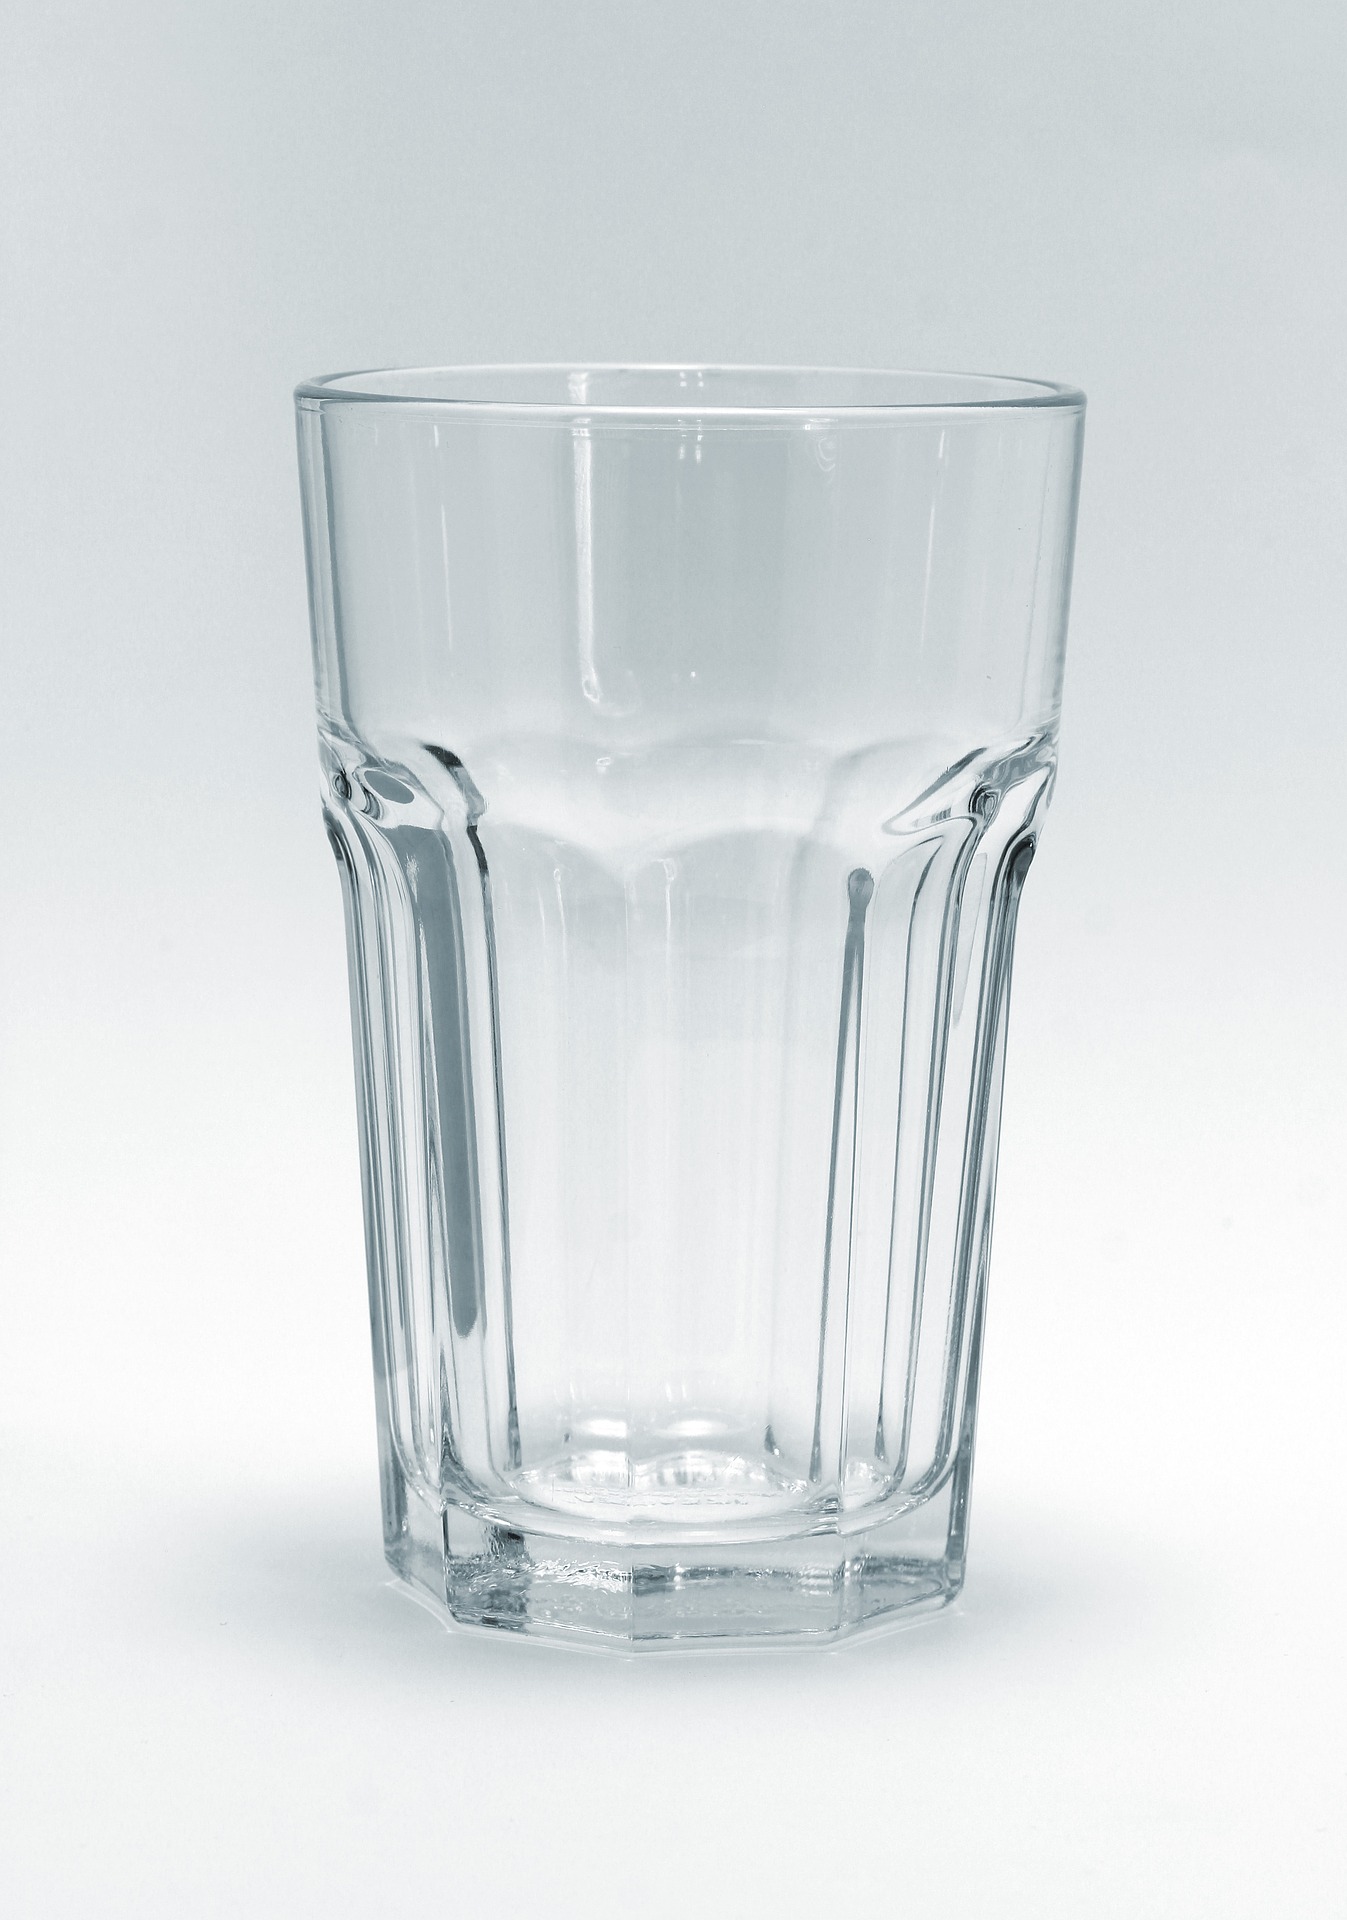 Стекольный стакан. Стакан стеклянный. Стакан воды. Стаканы для воды стеклянные. Прозрачный стакан.